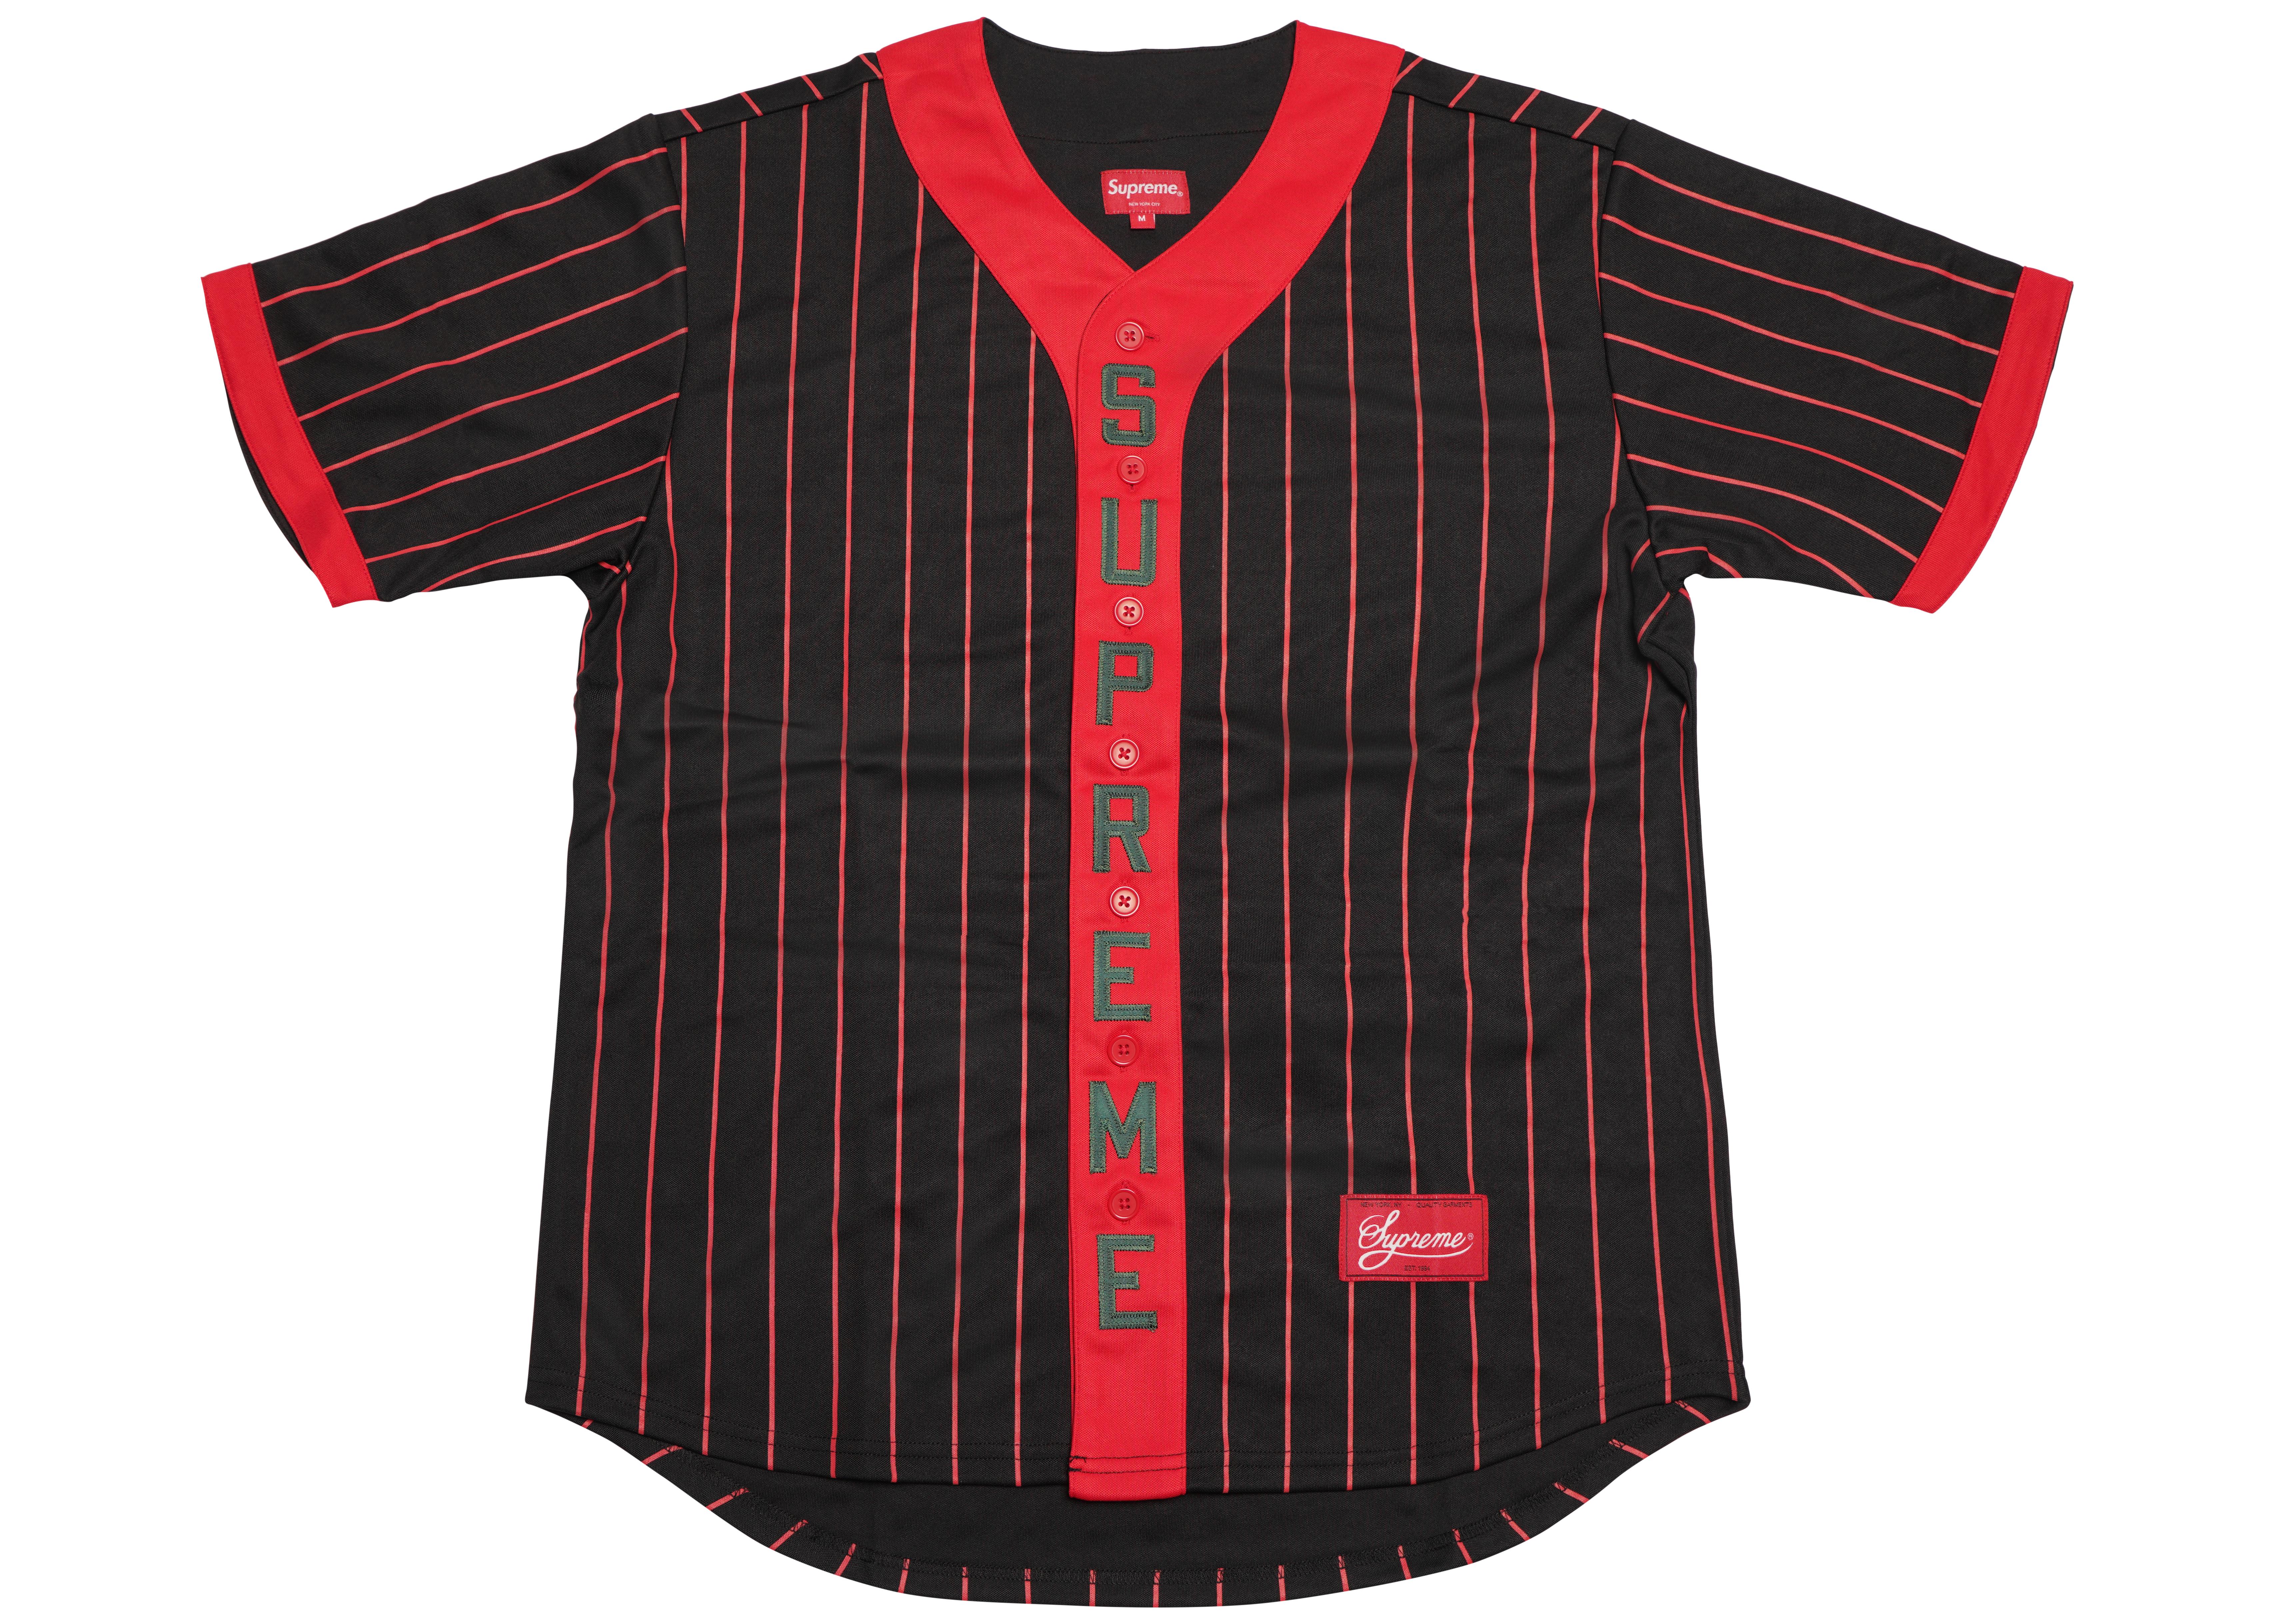 Lyst - Supreme Vertical Logo Baseball Jersey Black/red in Black for Men